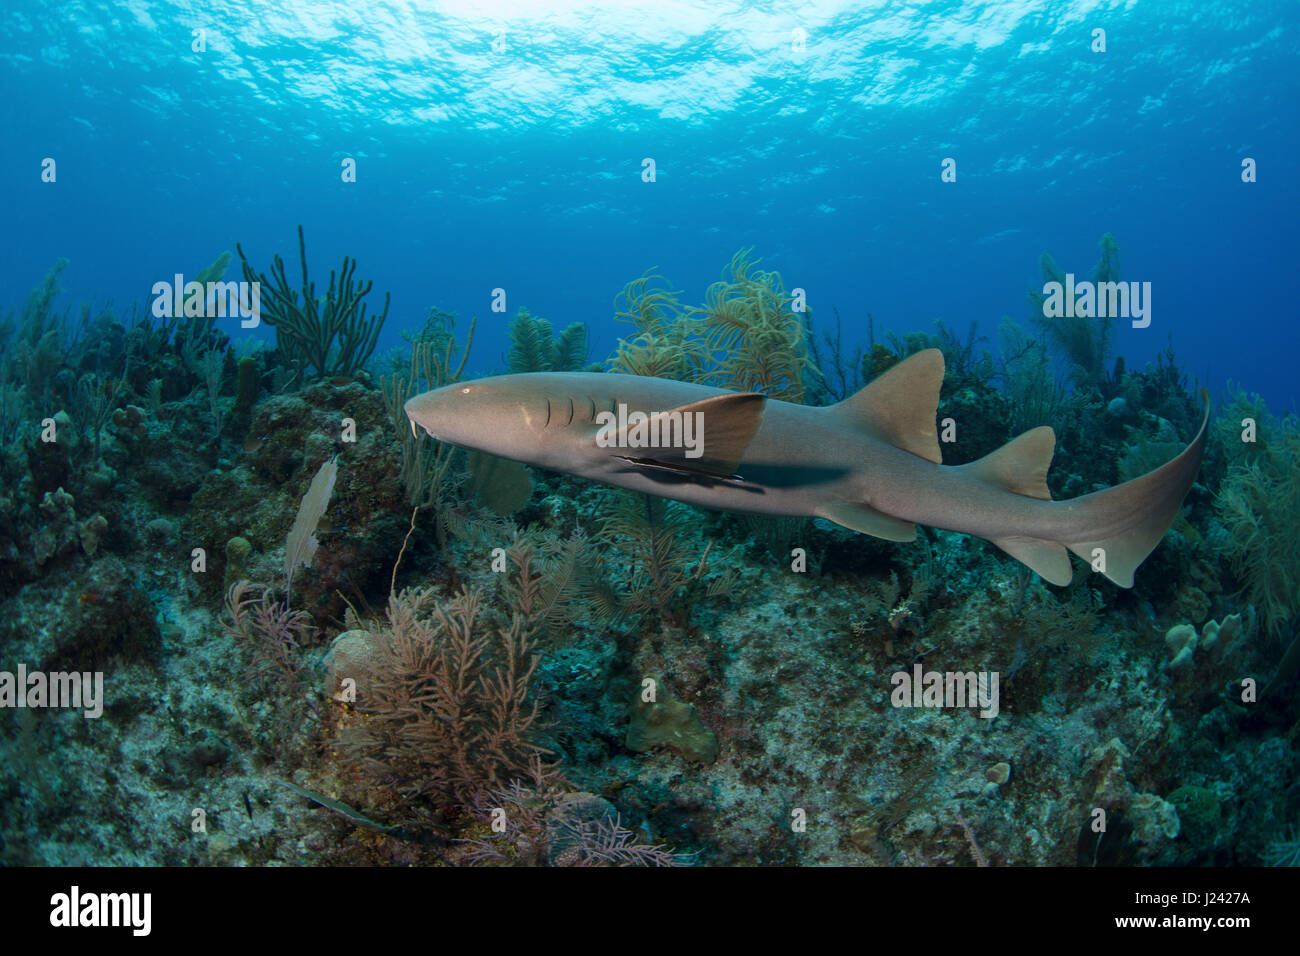 A nurse shark cruises over a reef in the Caribbean. Stock Photo